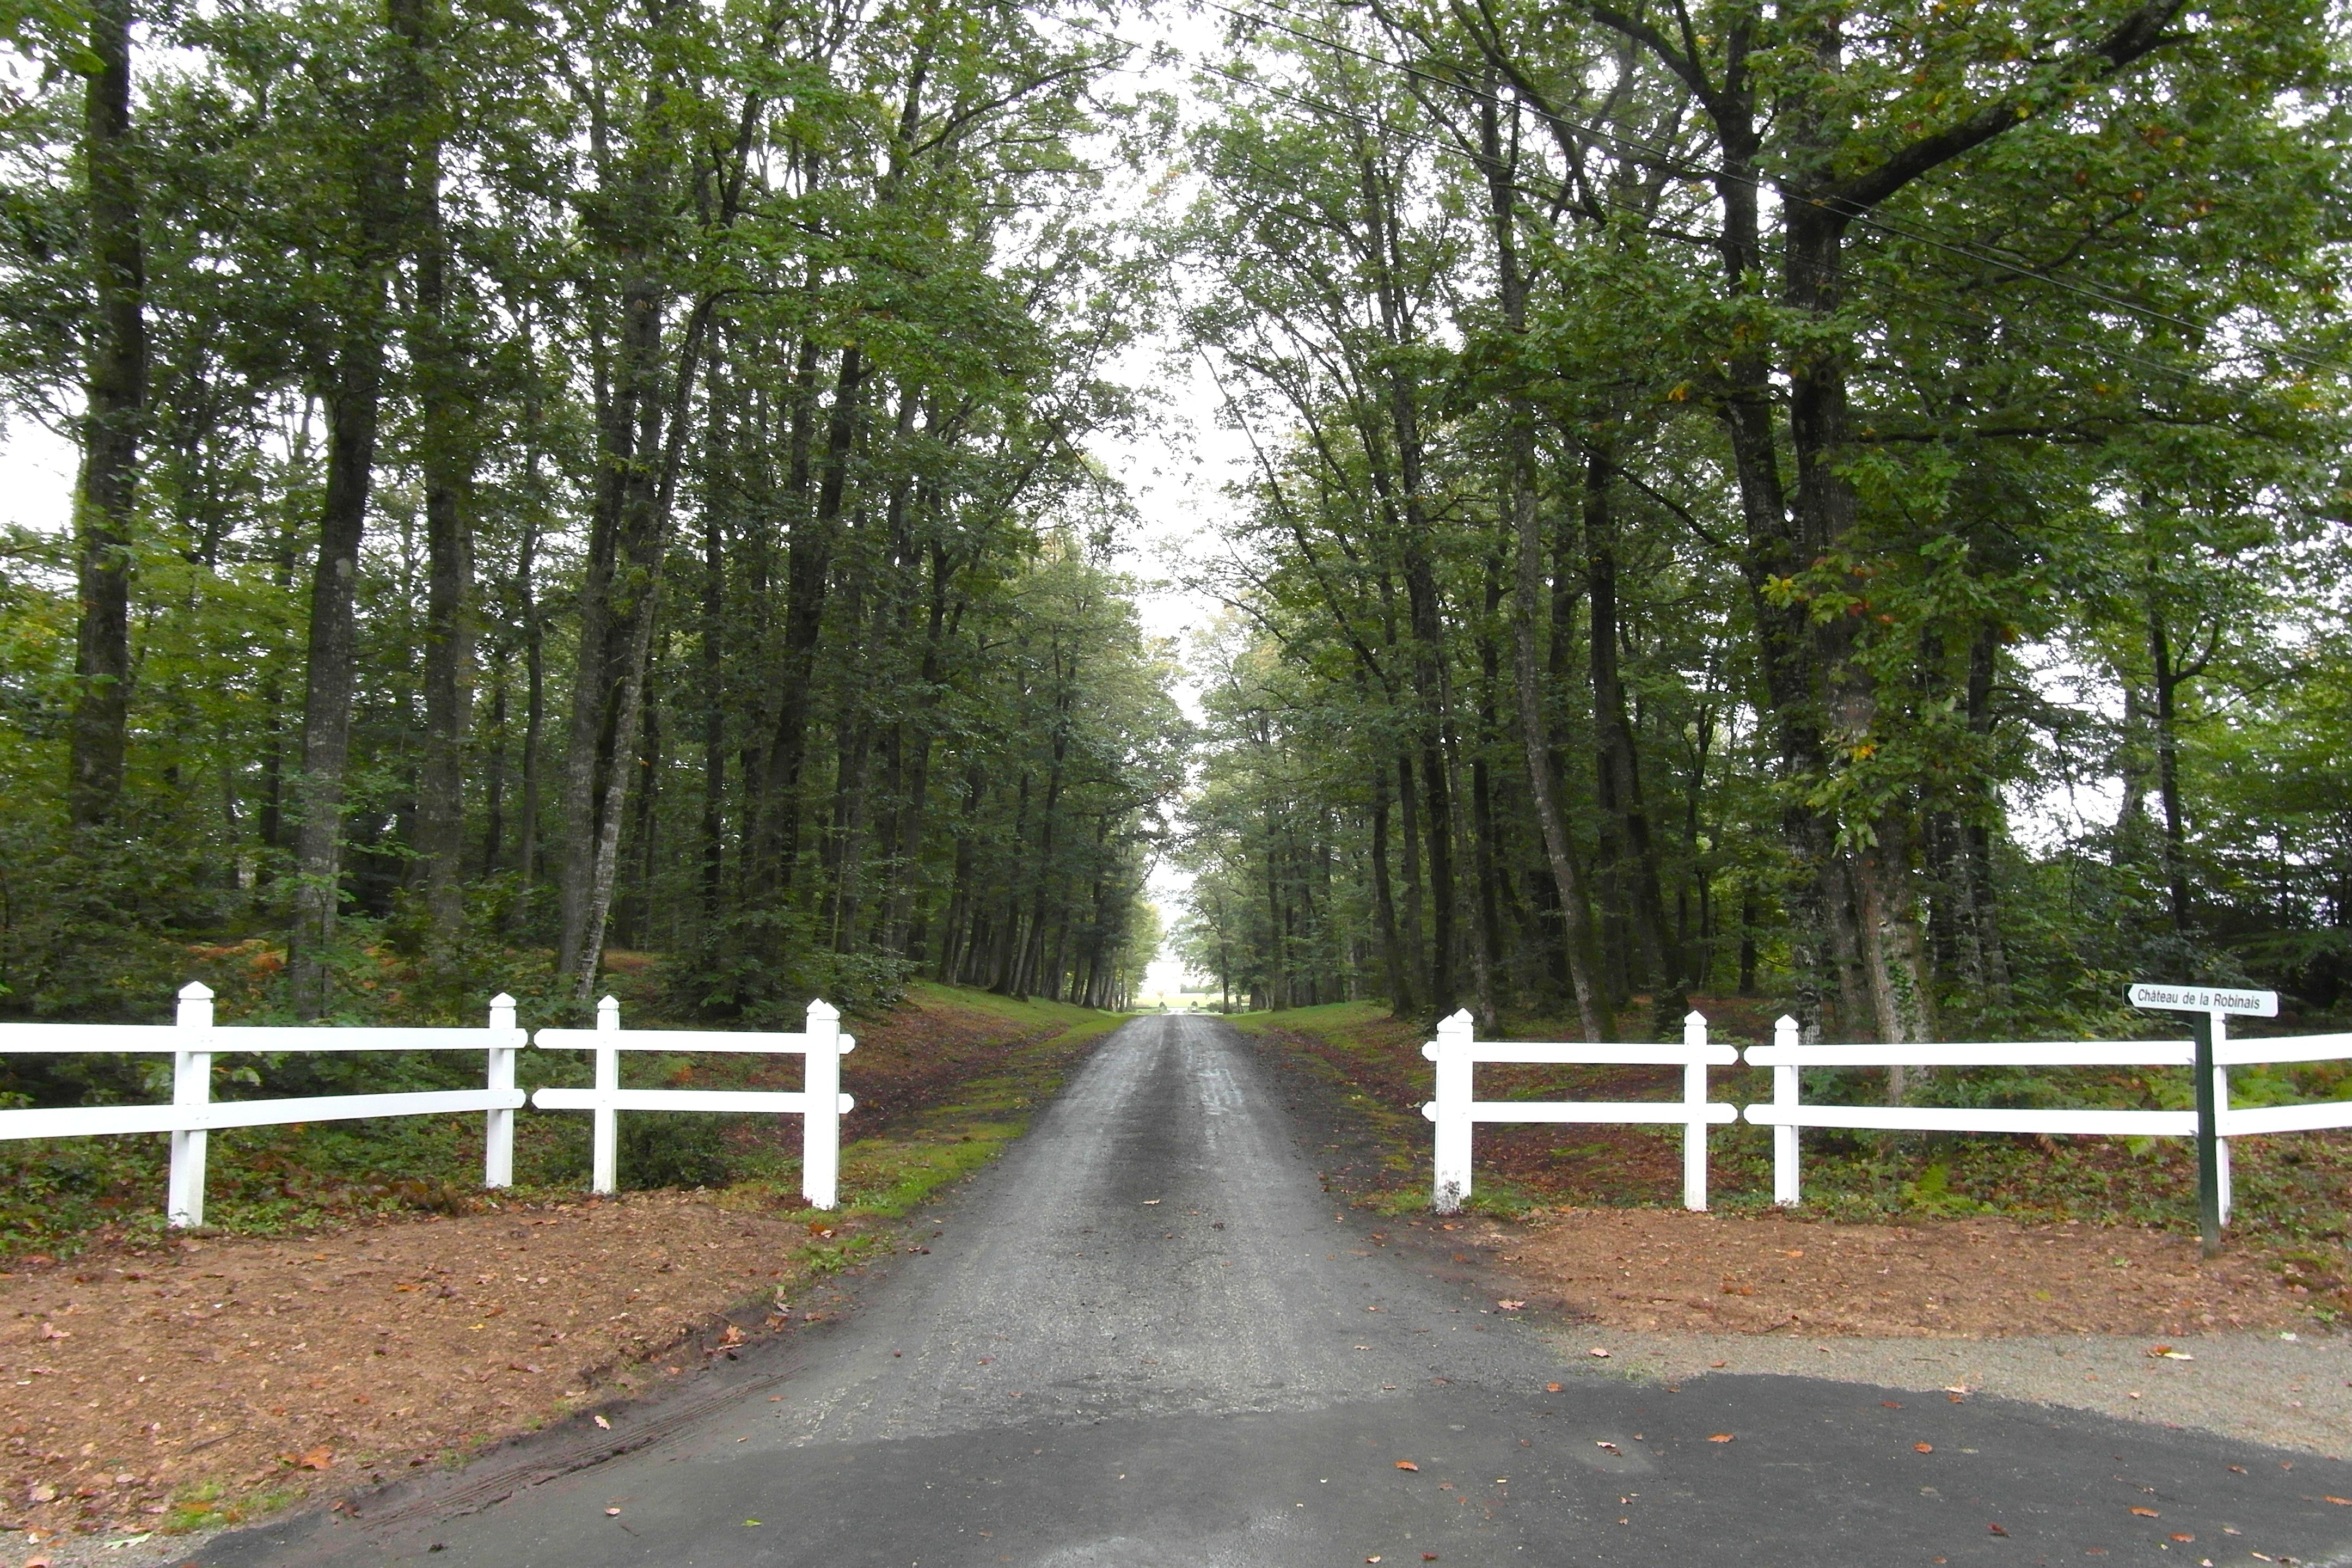 asphalt road and brown wooden picket fence